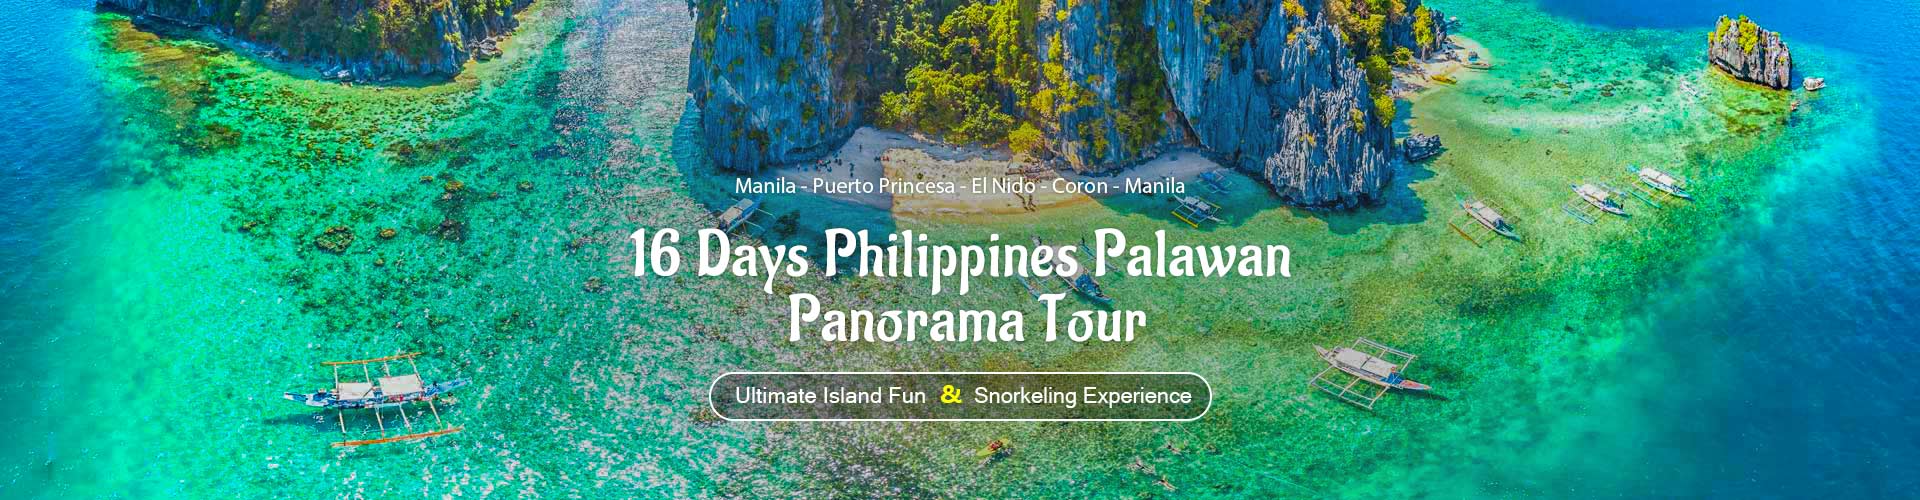 Philippines Palawan Tour